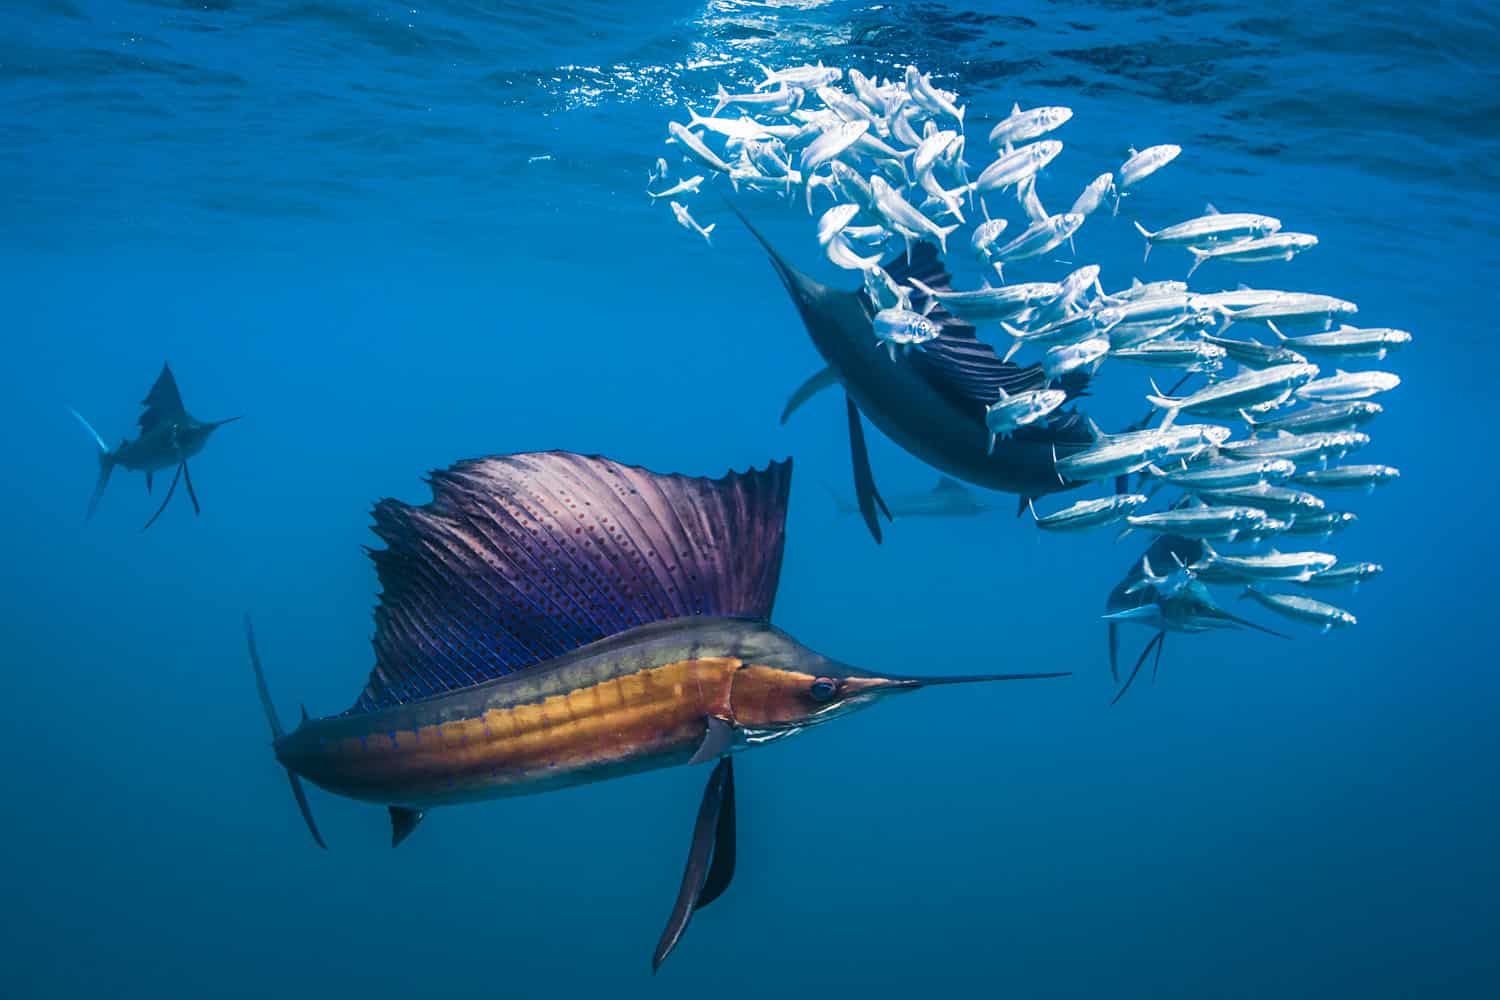 Shawn_Heinrichs_Sailfish_Hunt_pez espada persigue sardinas, fotografia naturaleza para salvbar el medio ambiente